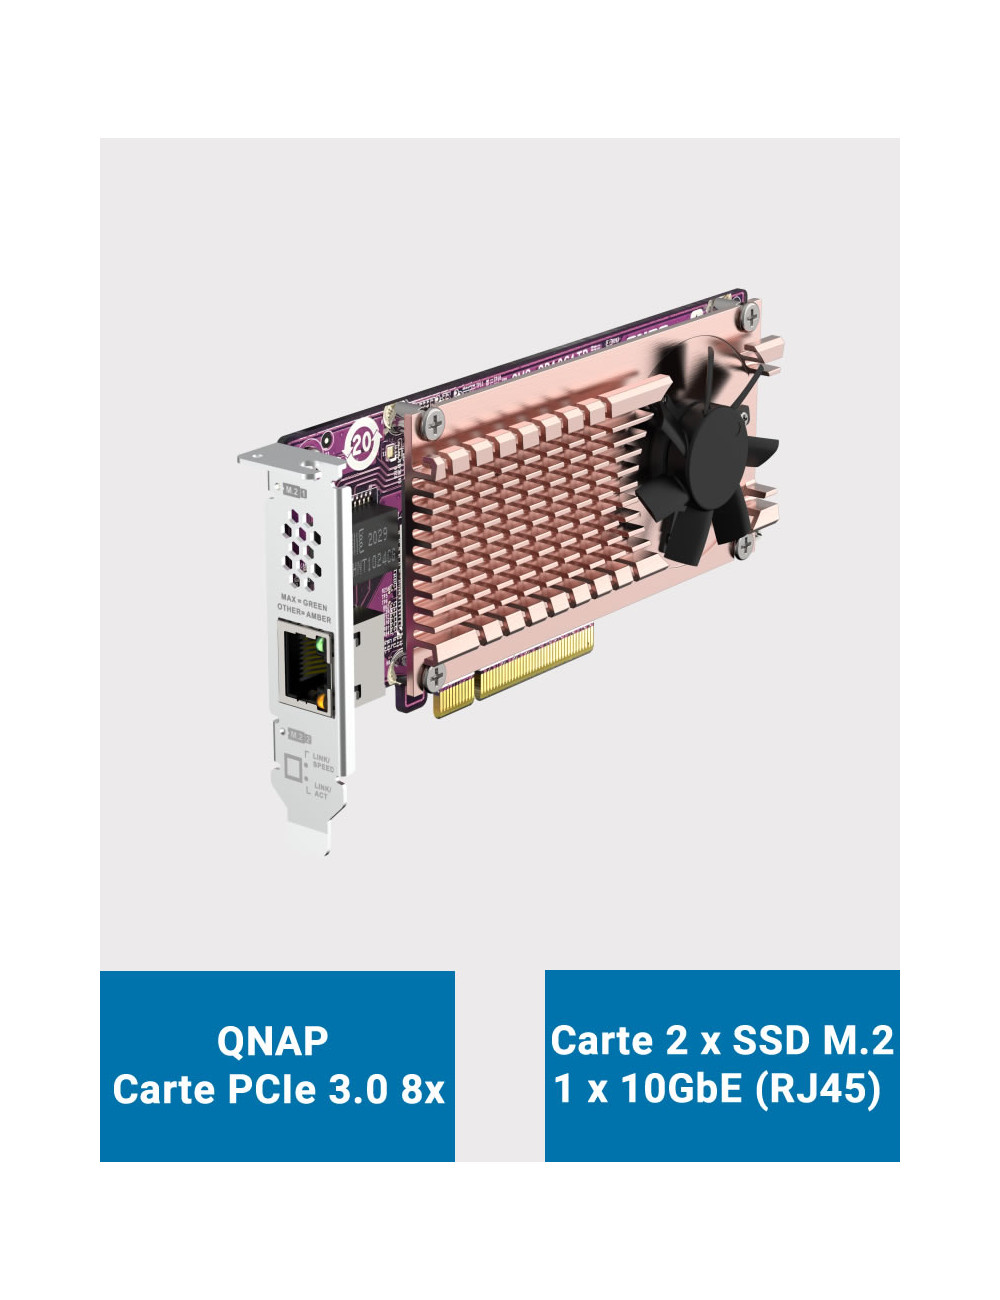 QNAP Dual M.2 2280 PCIe NVMe SSD & single-port 10GbE expansion card